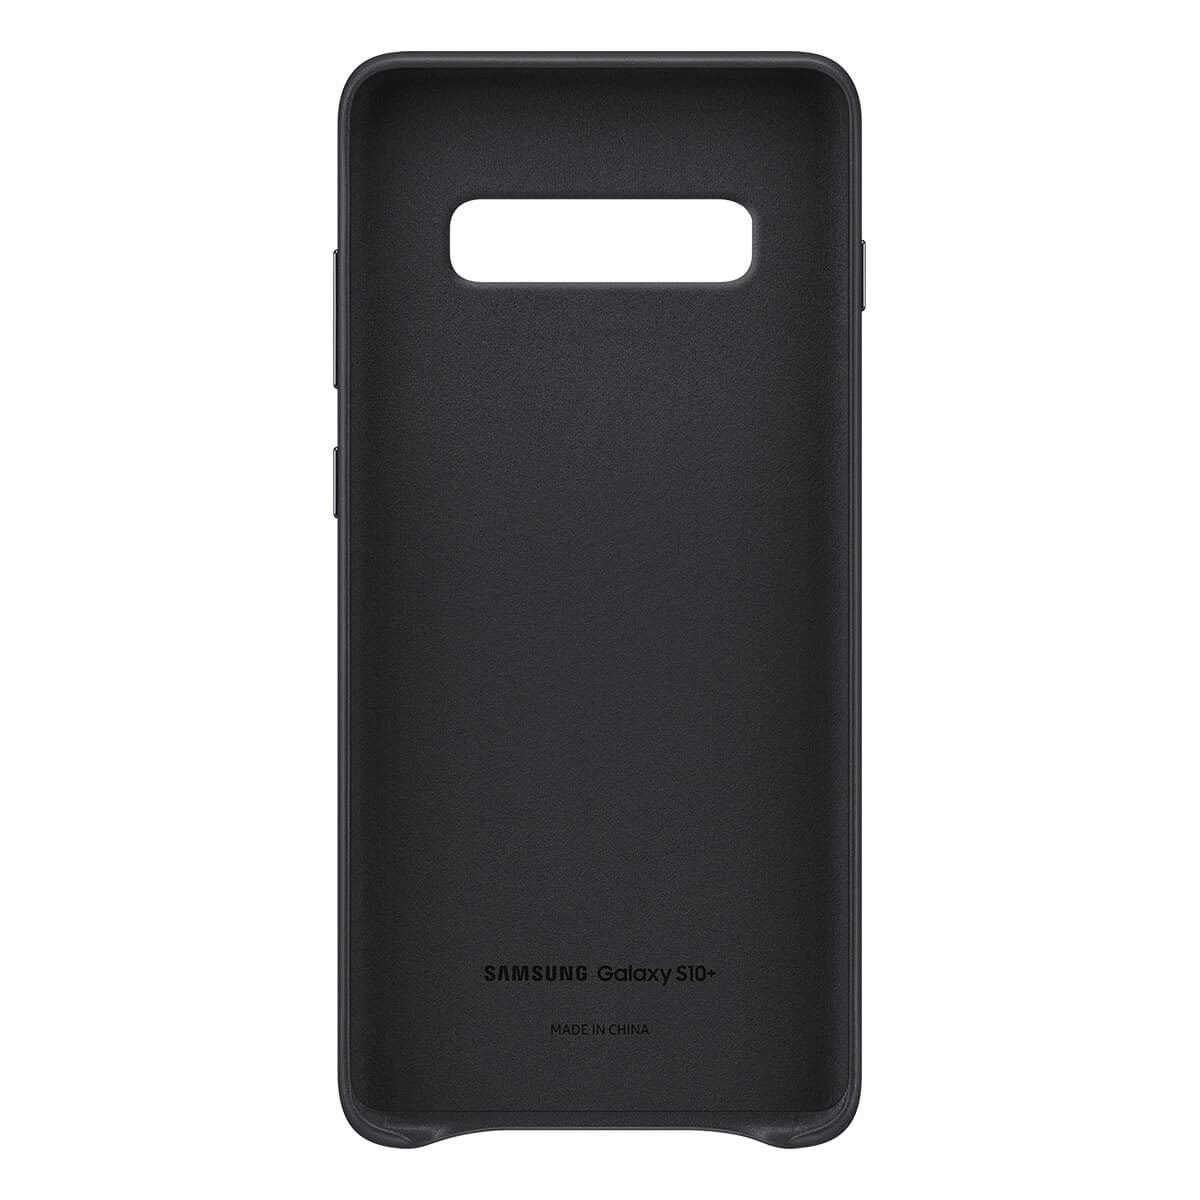 Funda para Galaxy S10+ Color Negro Leather Cover Samsung